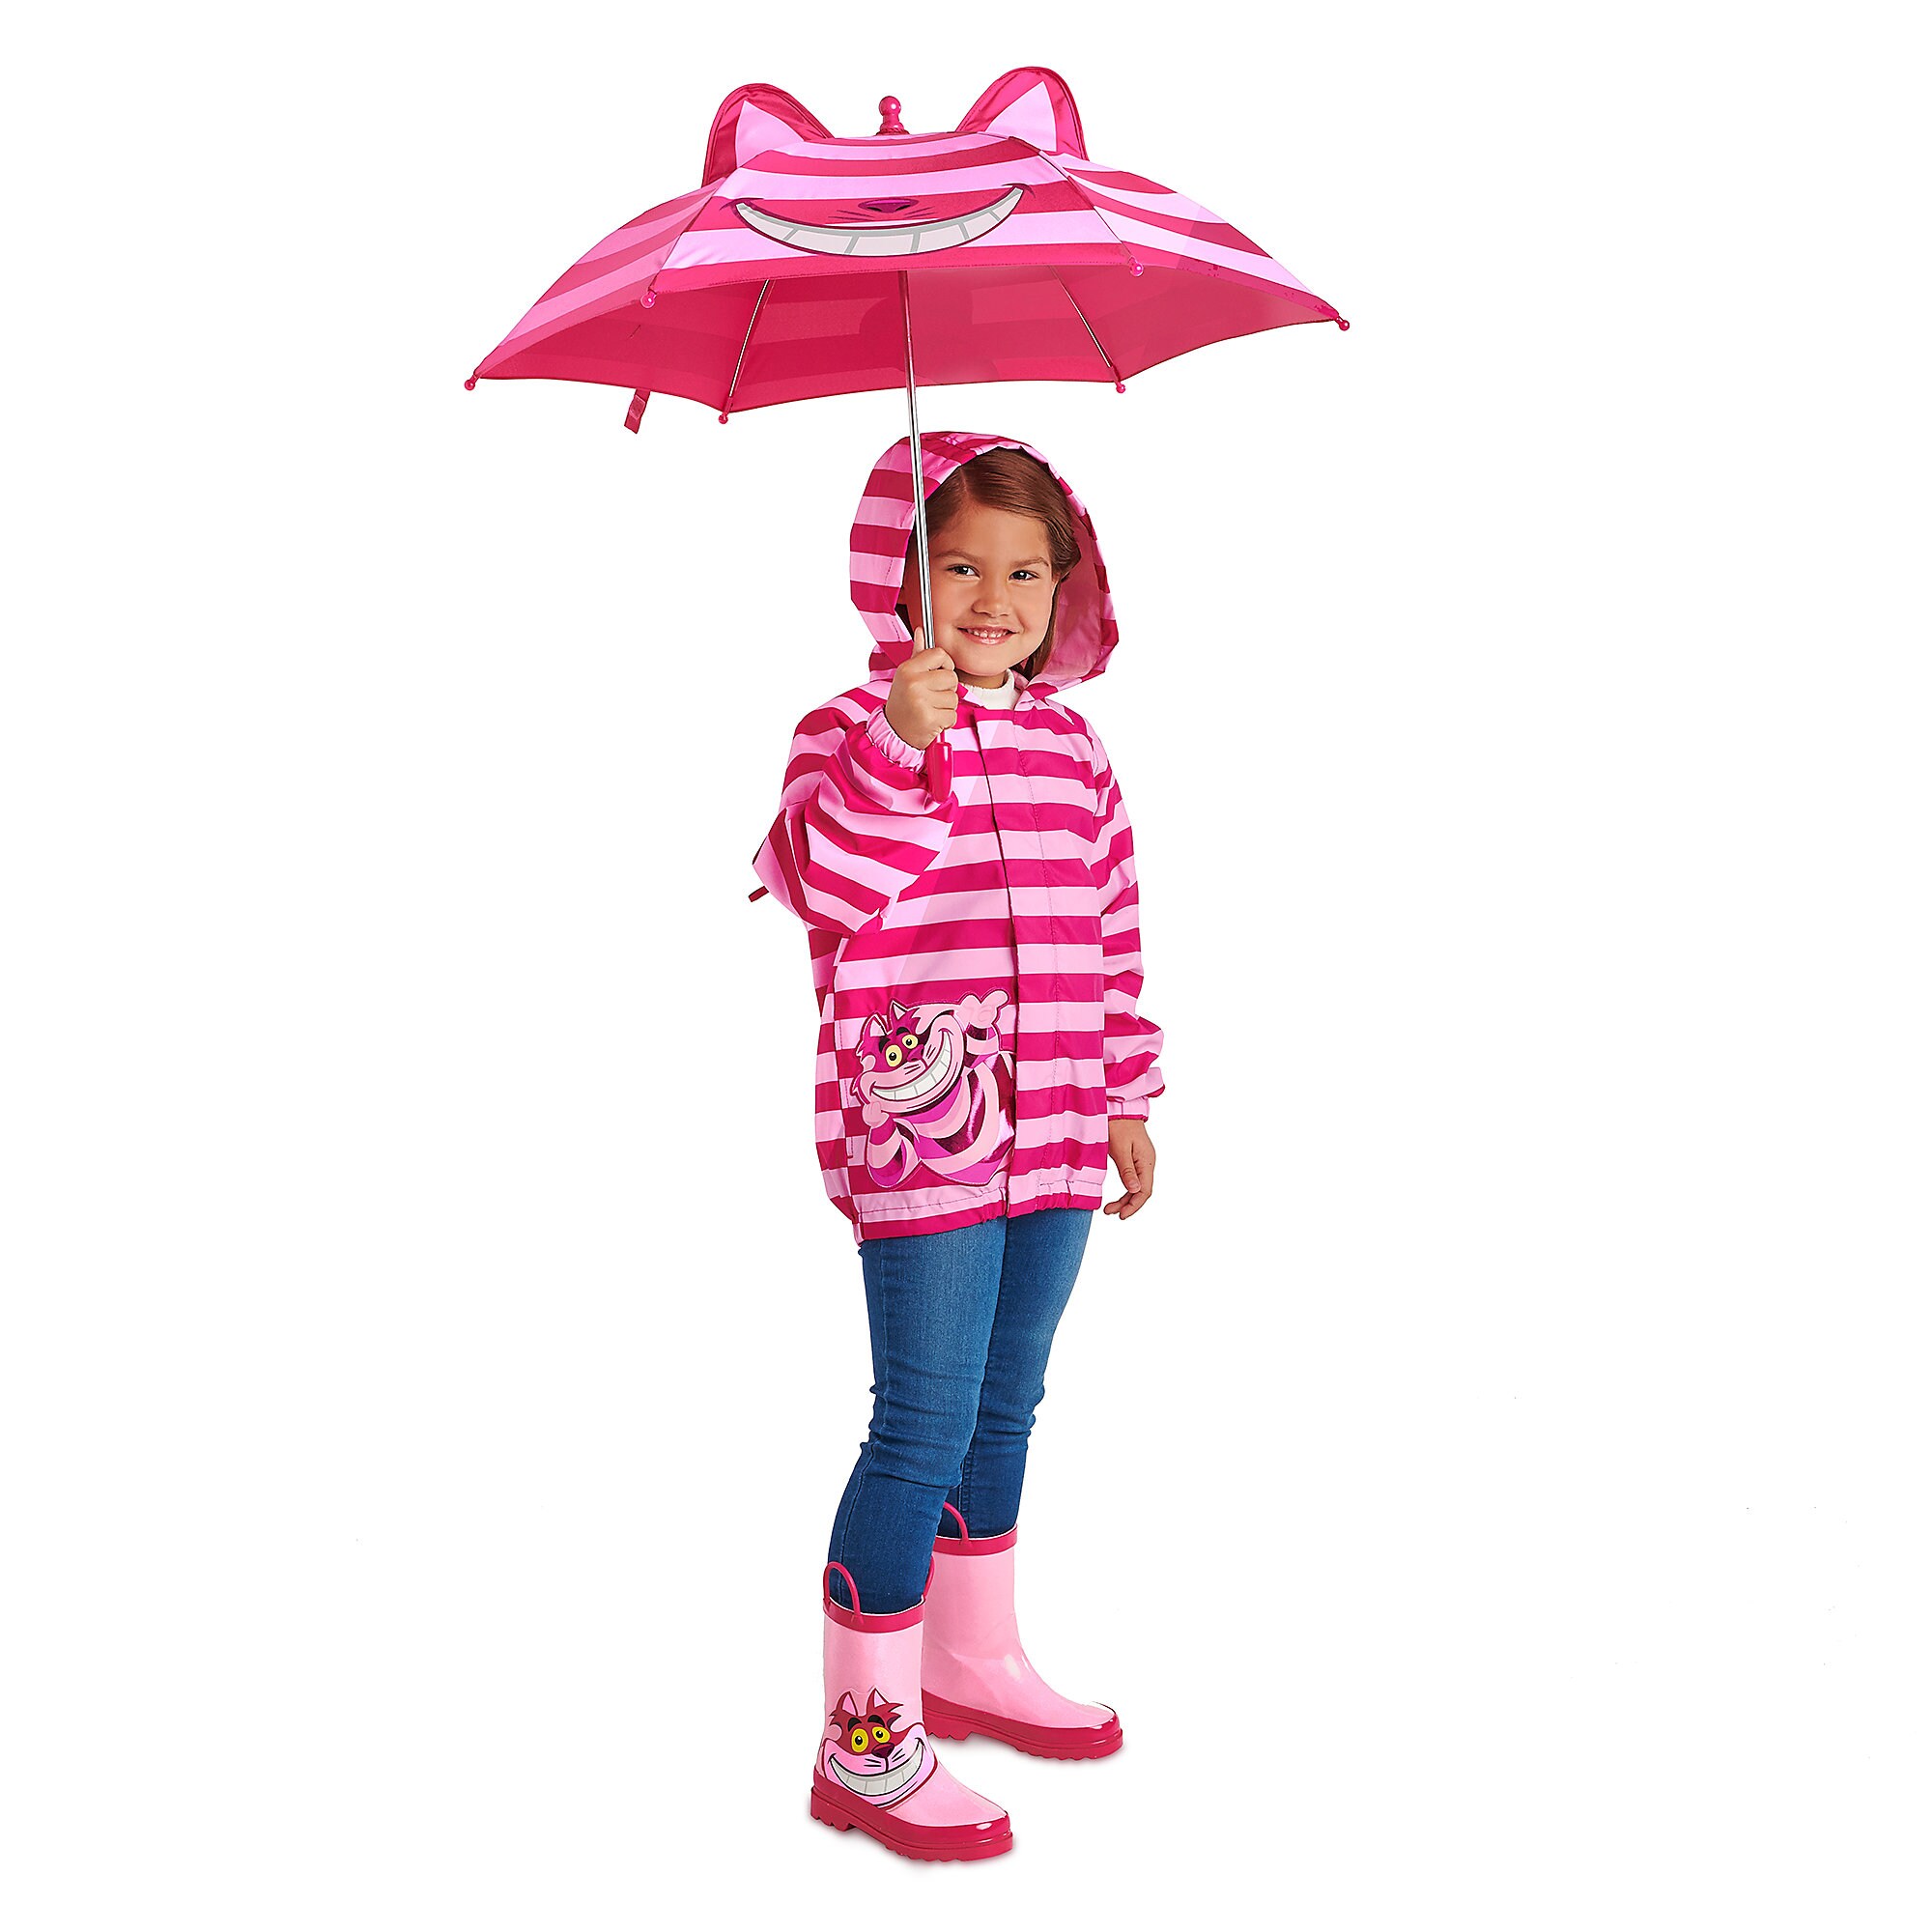 Cheshire Cat Rain Boots for Kids